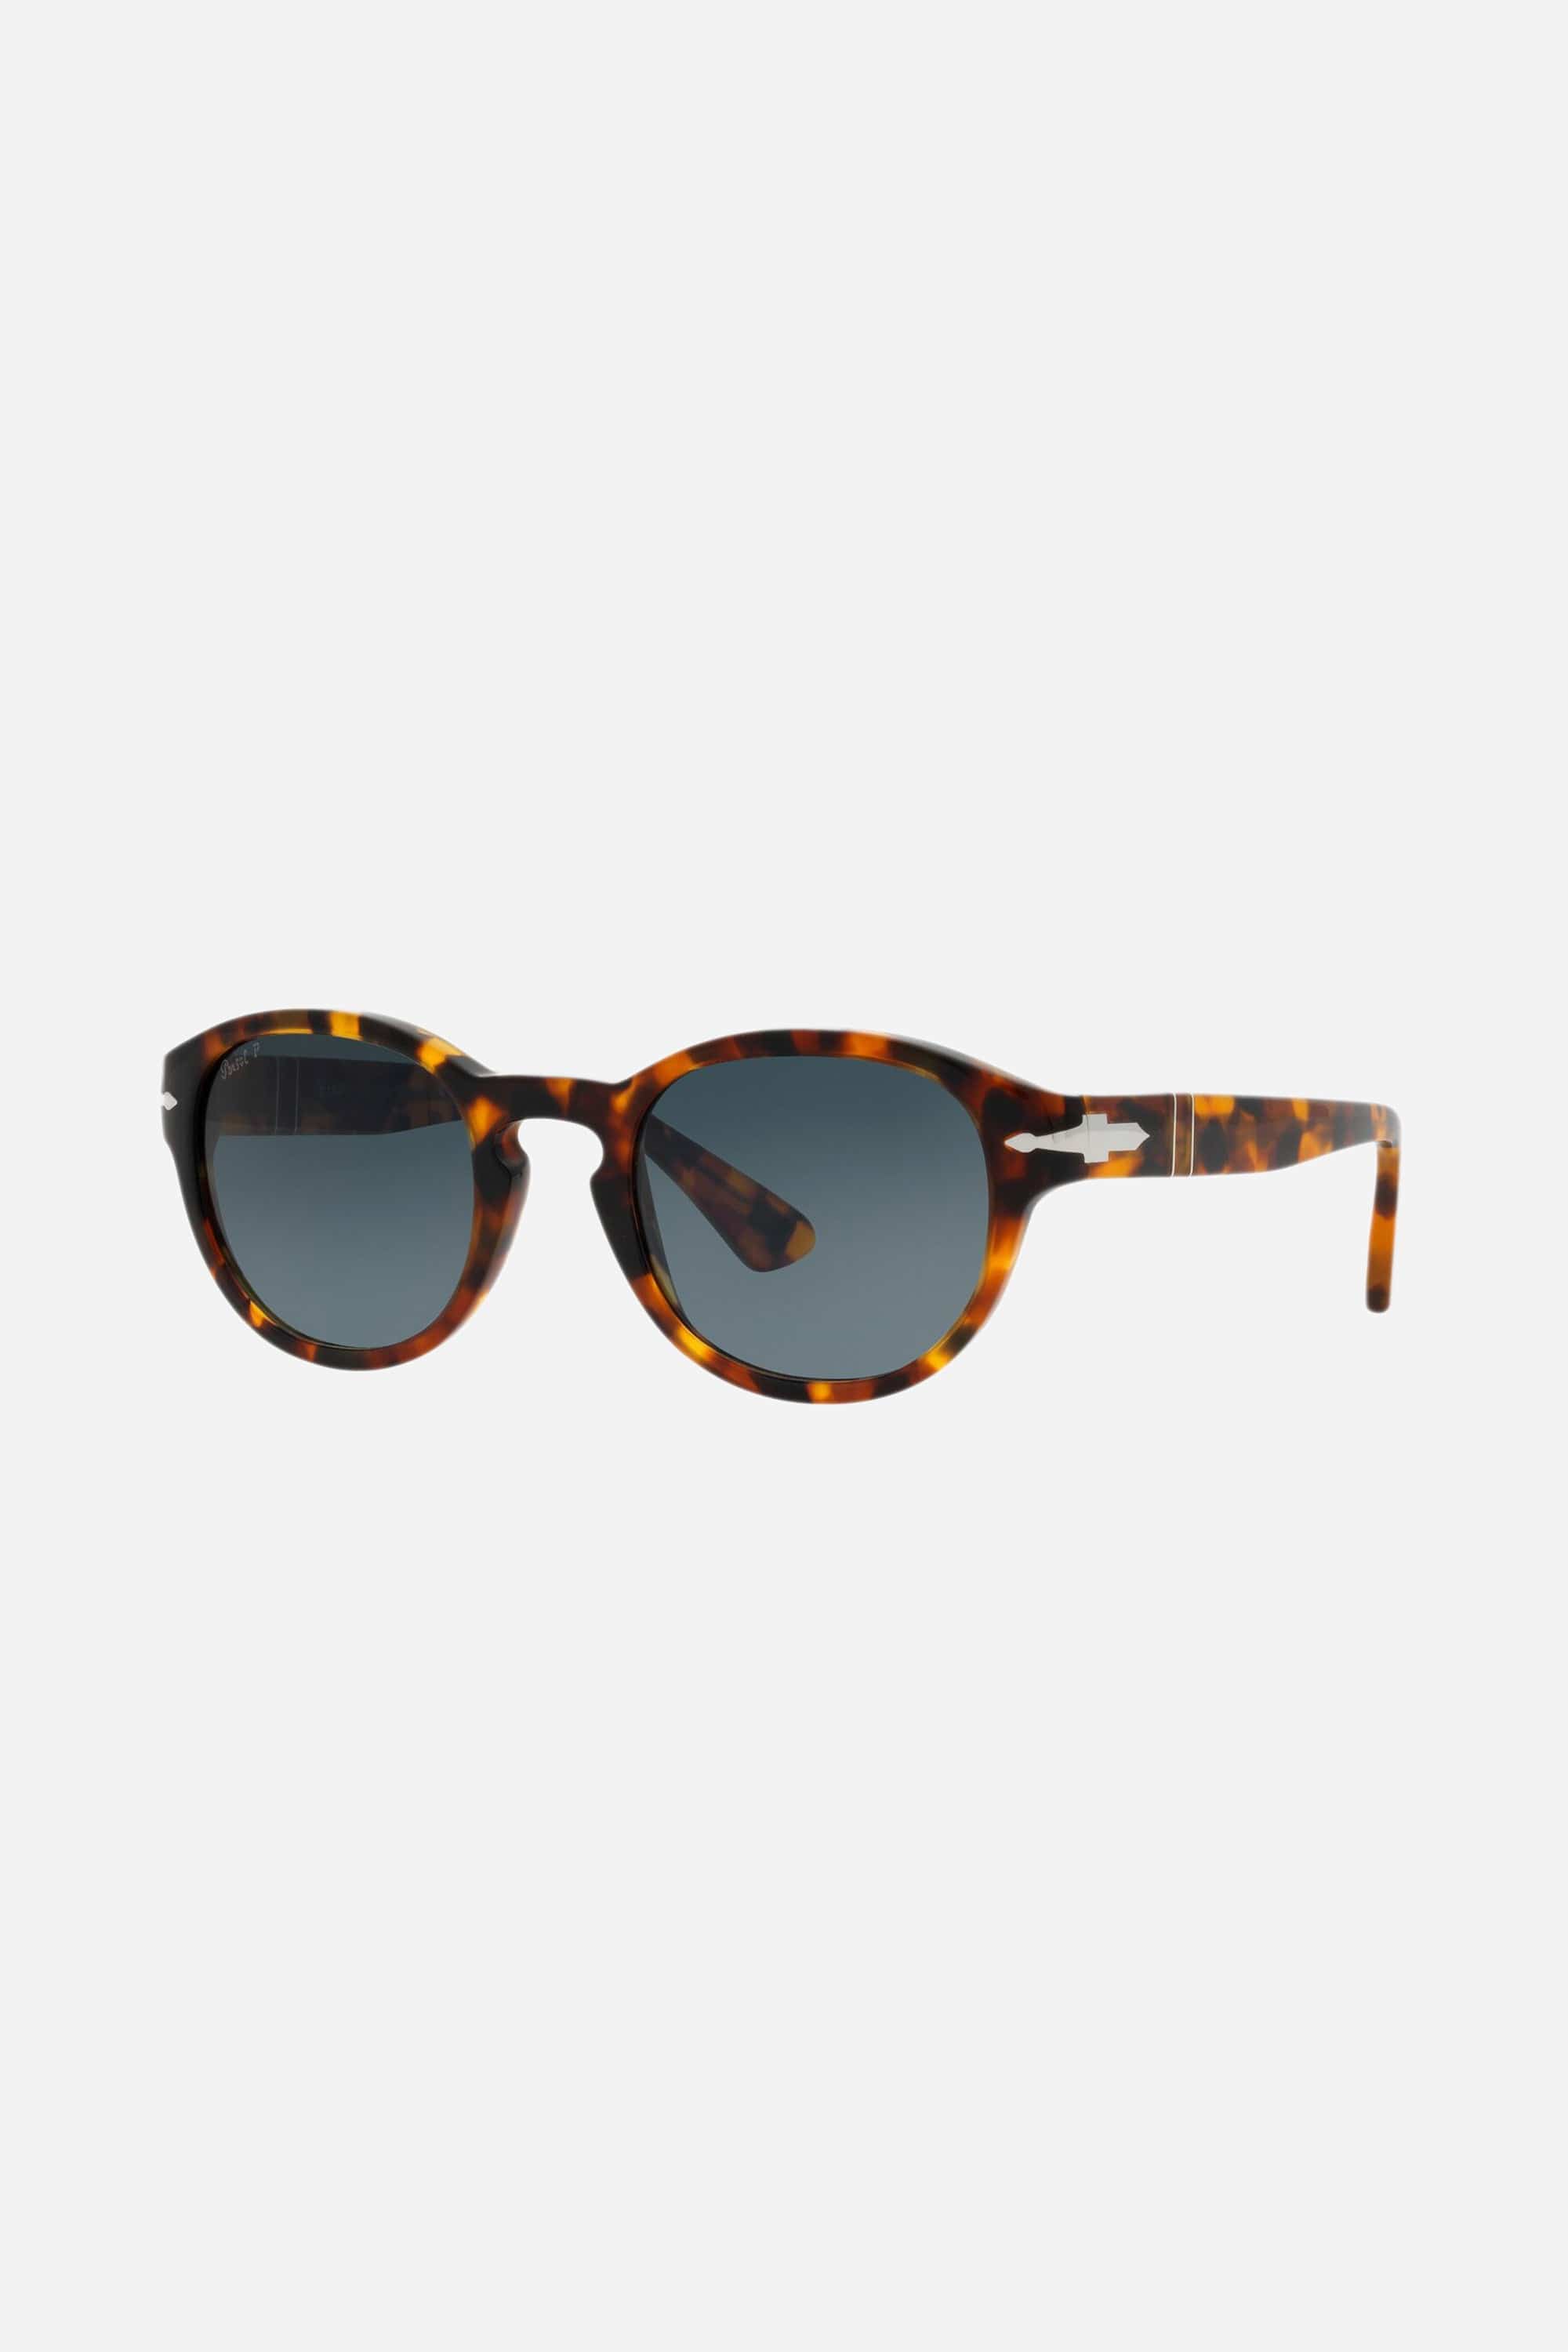 Persol round classic havana sunglasses - Eyewear Club